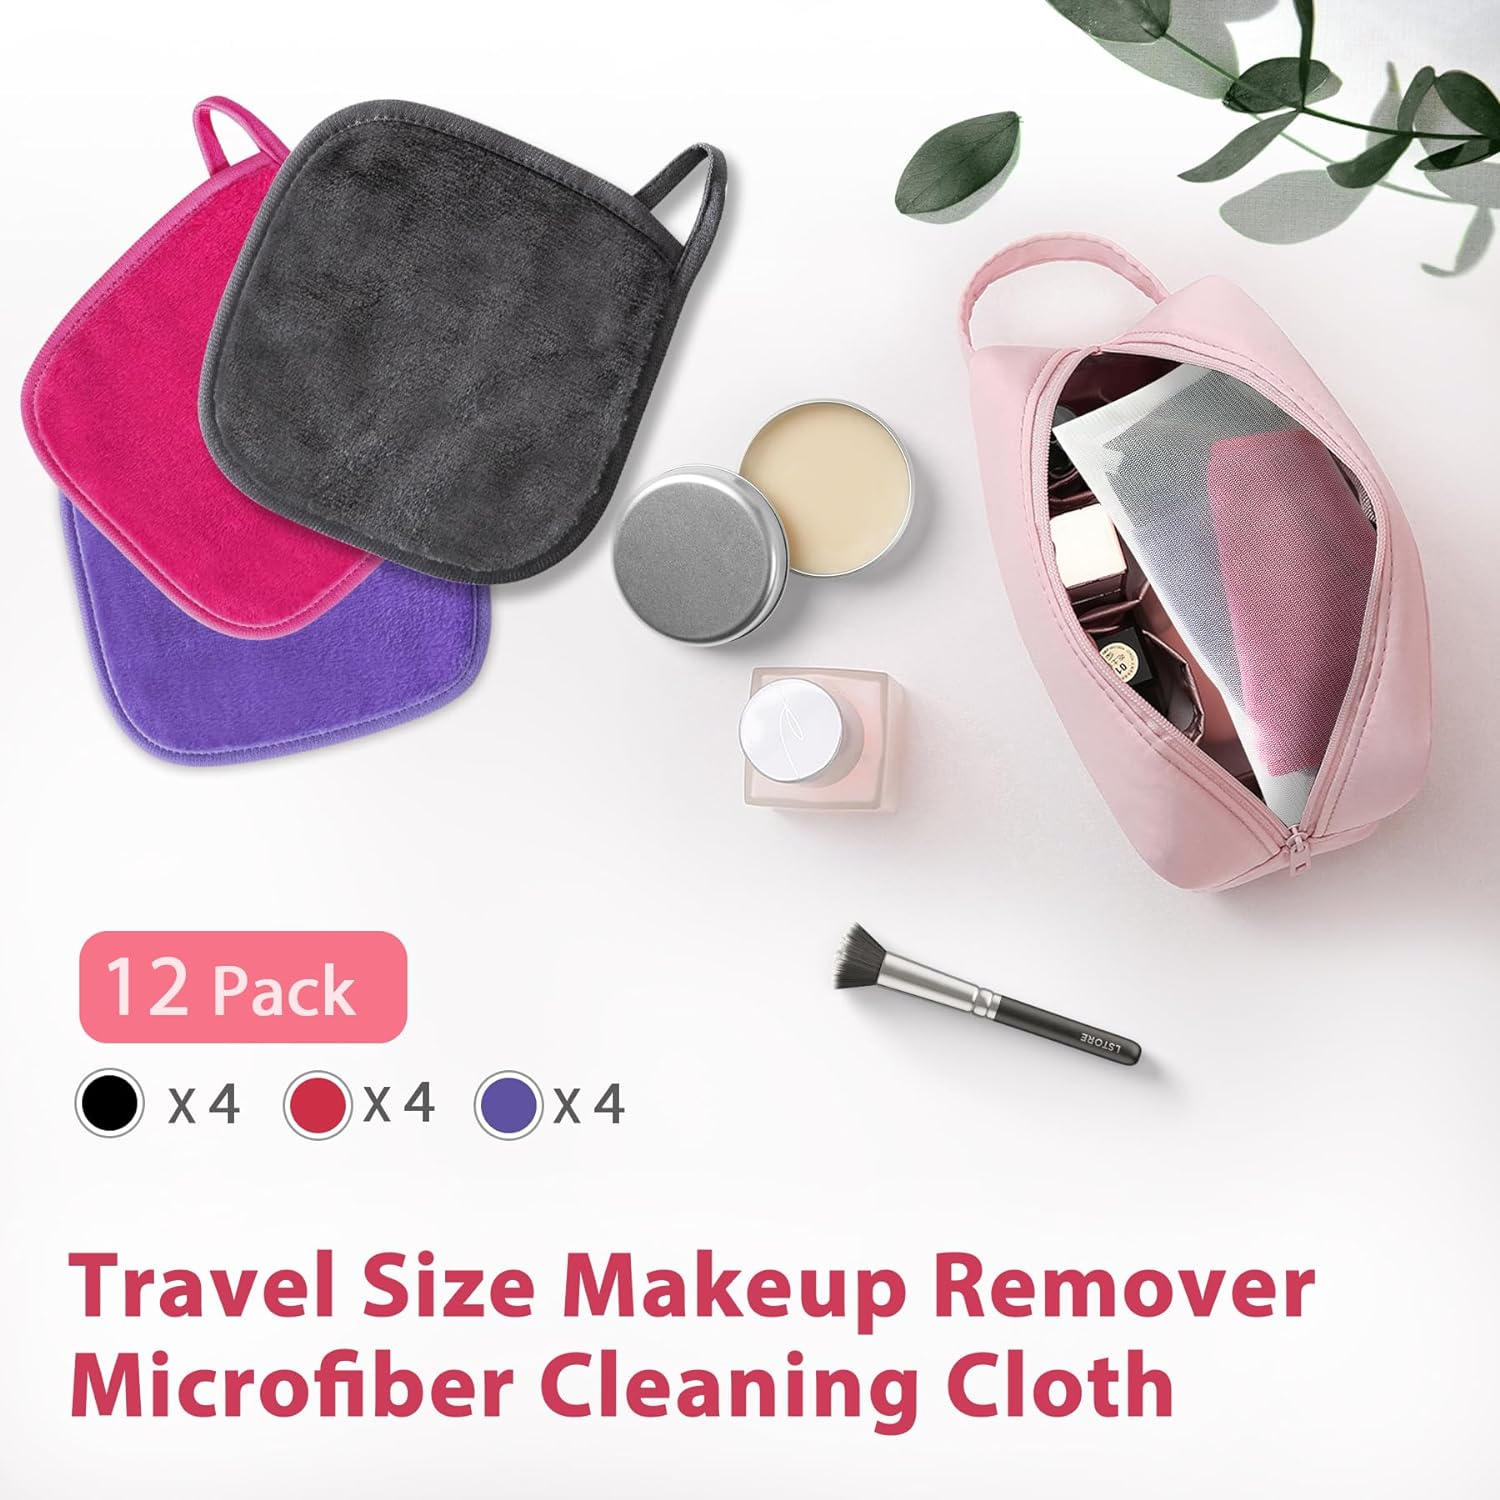 Makeup Remover Cloth Review